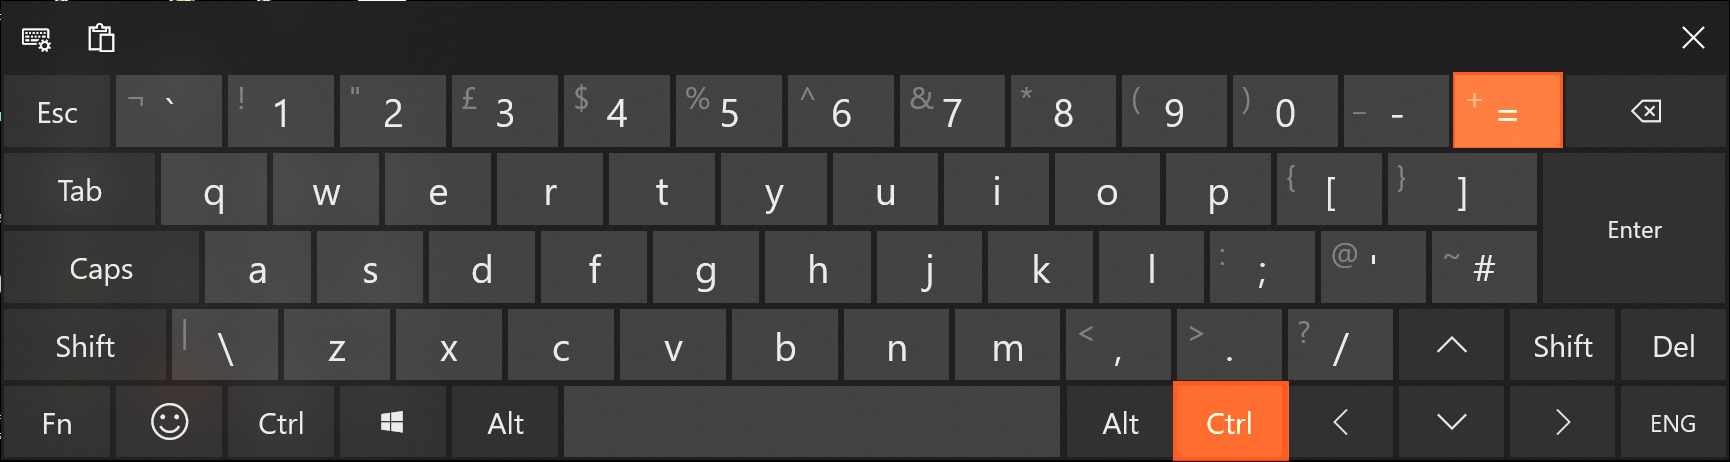 keystroke equivalent of del key on windows for mac